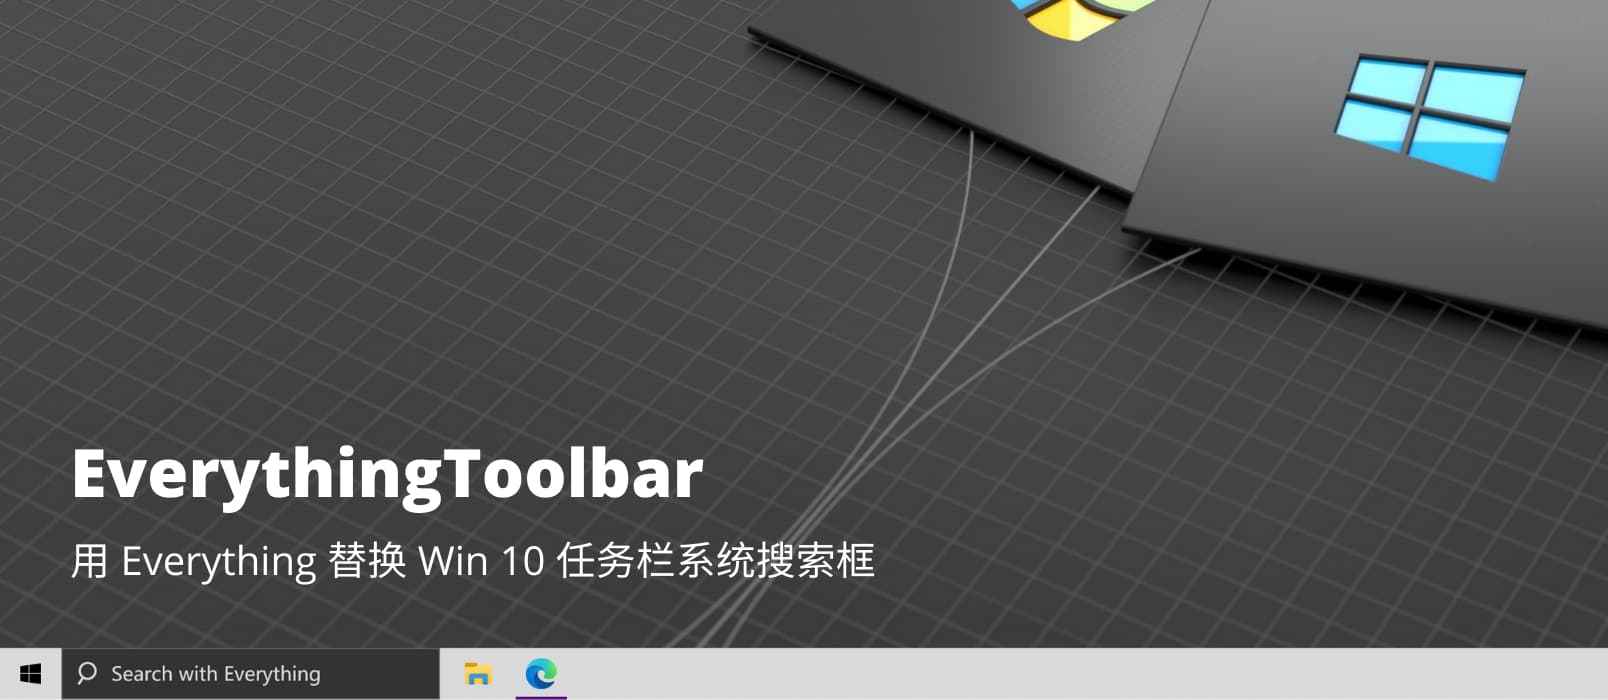 Everything Toolbar – 用 Everything 替换 Win 10 任务栏系统搜索框